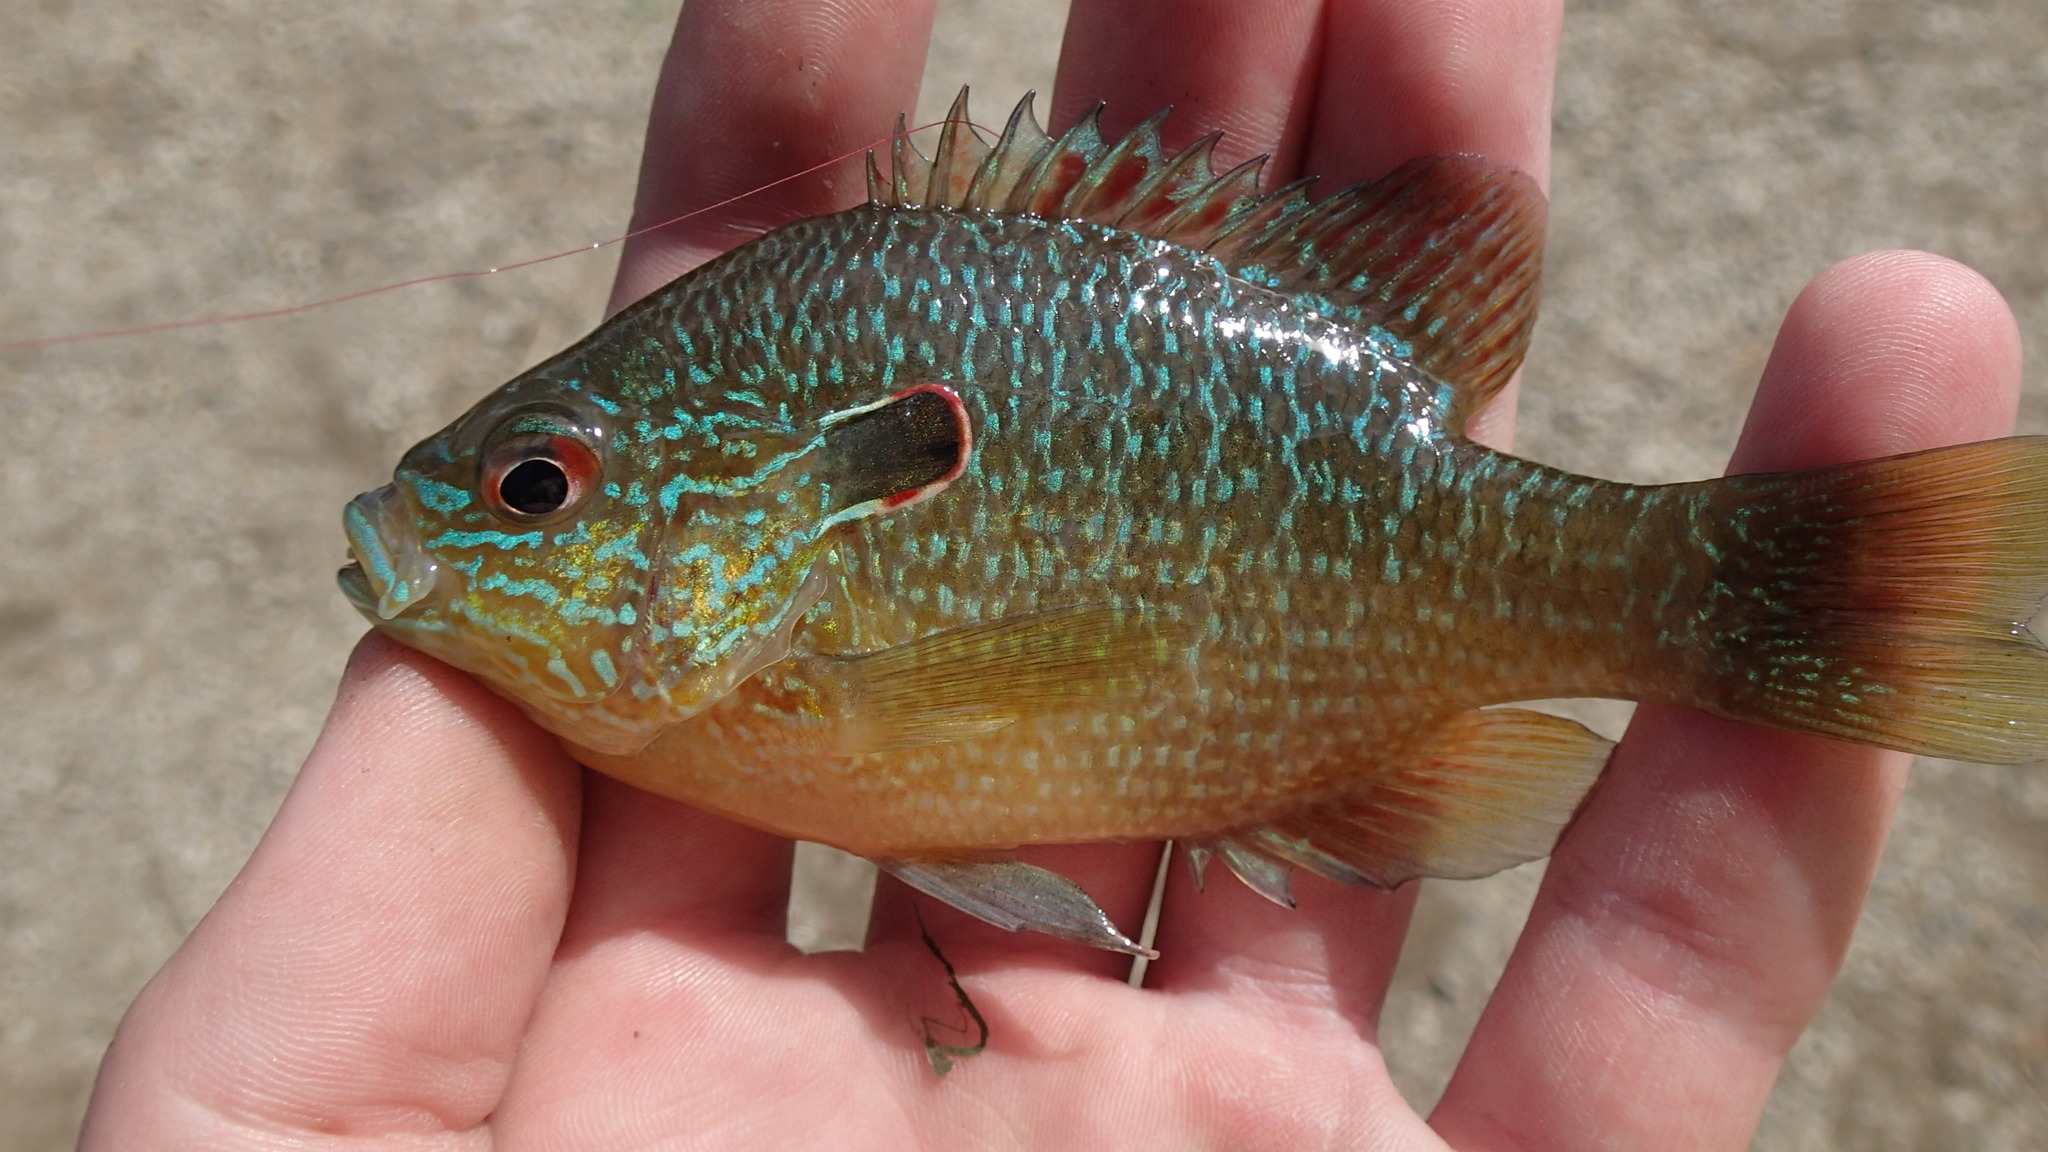 Northern Sunfish (Lepomis peltastes) — Koaw Nature